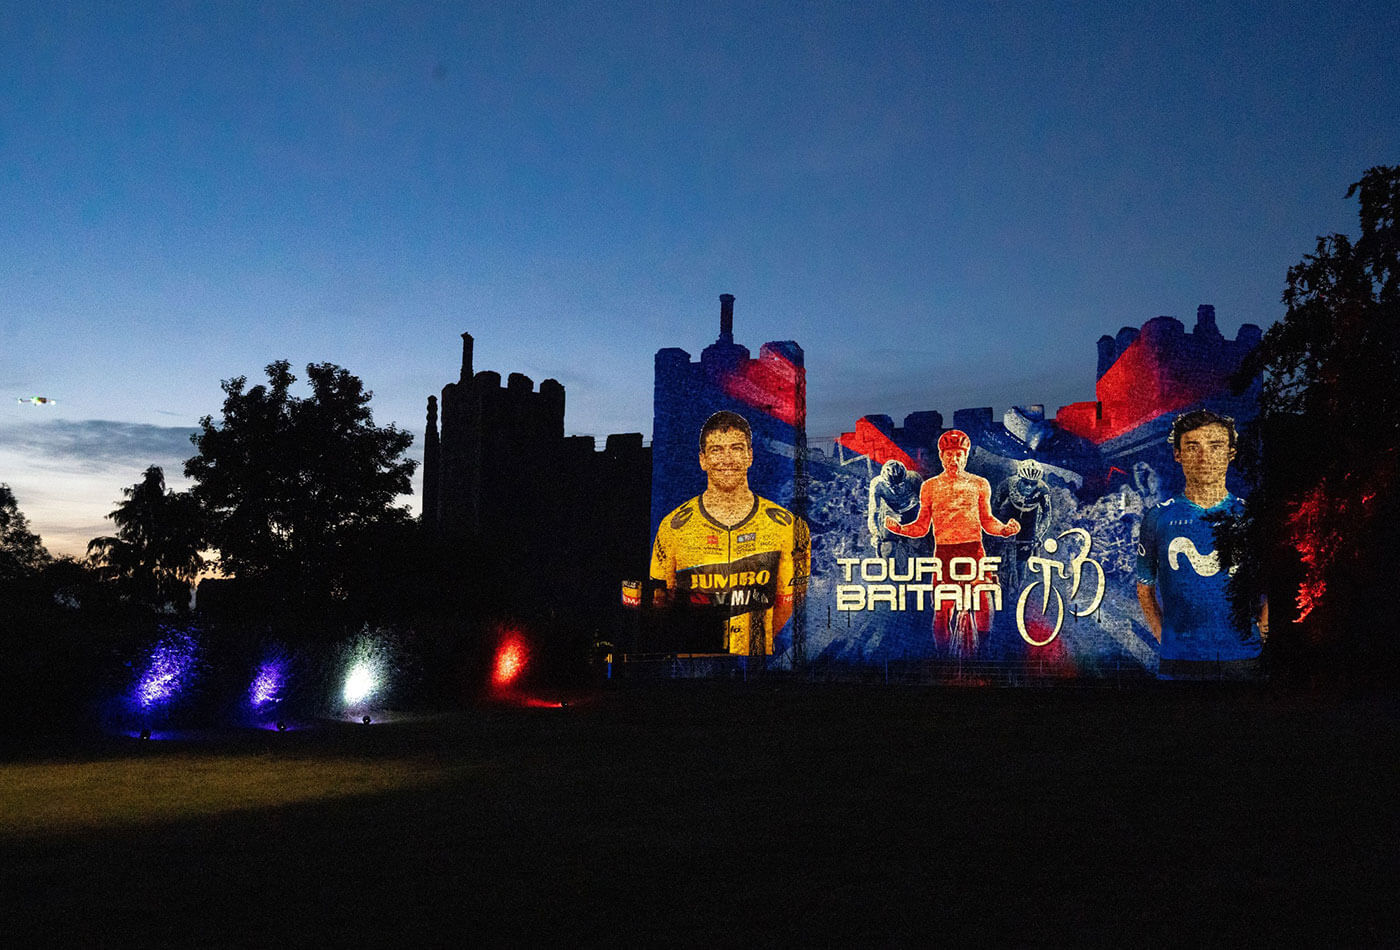 Tour of Britain projection on Framlingham Castle